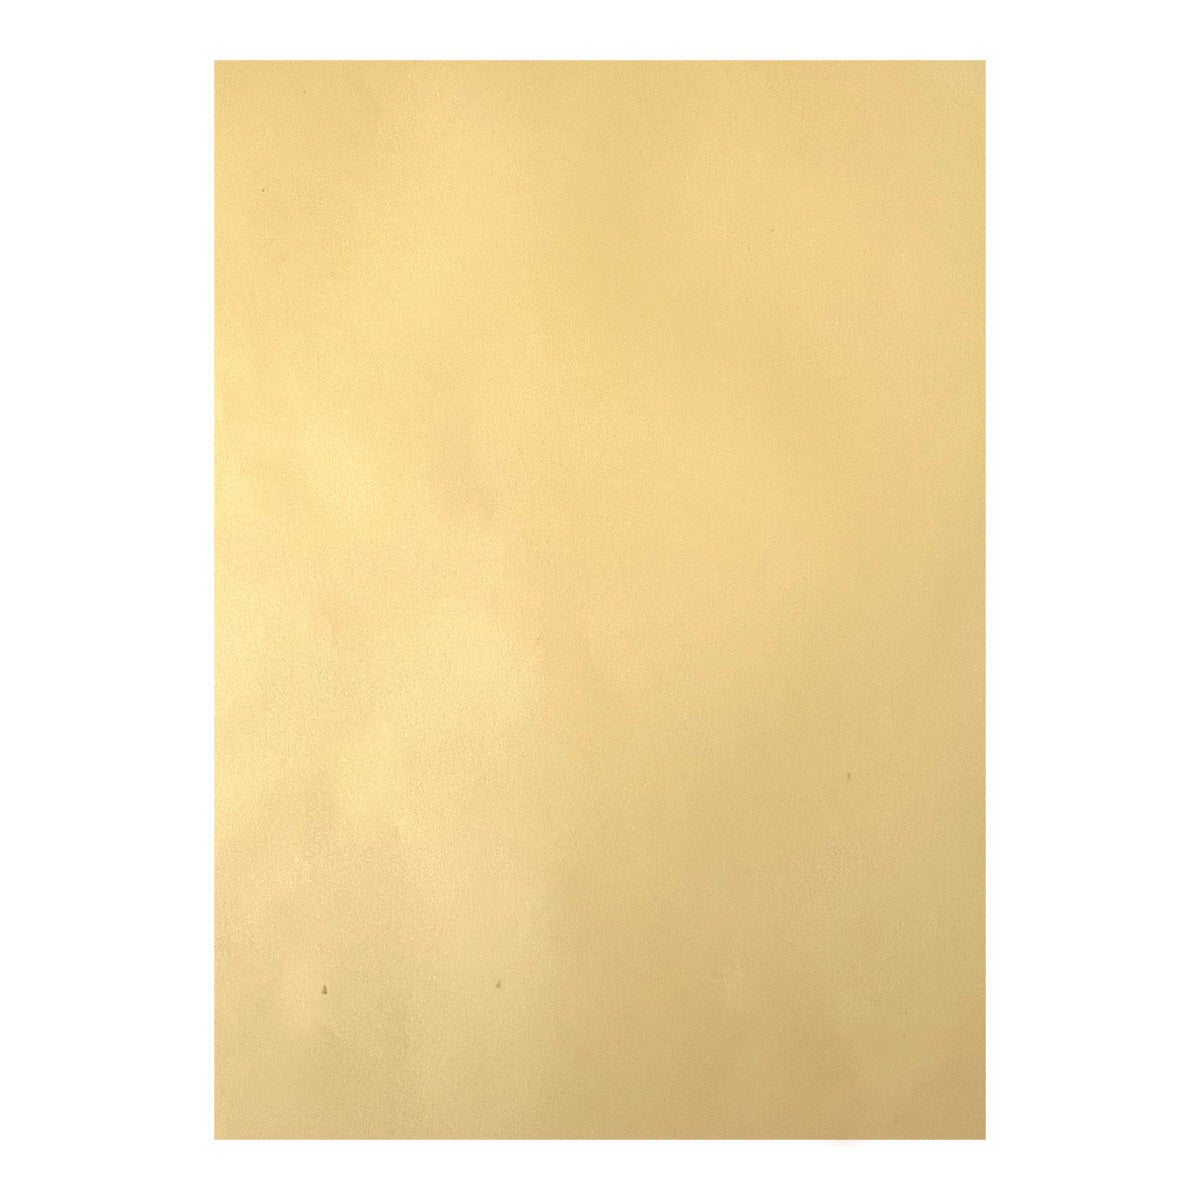 GILDED GOLD SHIMMER Translucent Vellum - 8½ x 11 - Encore